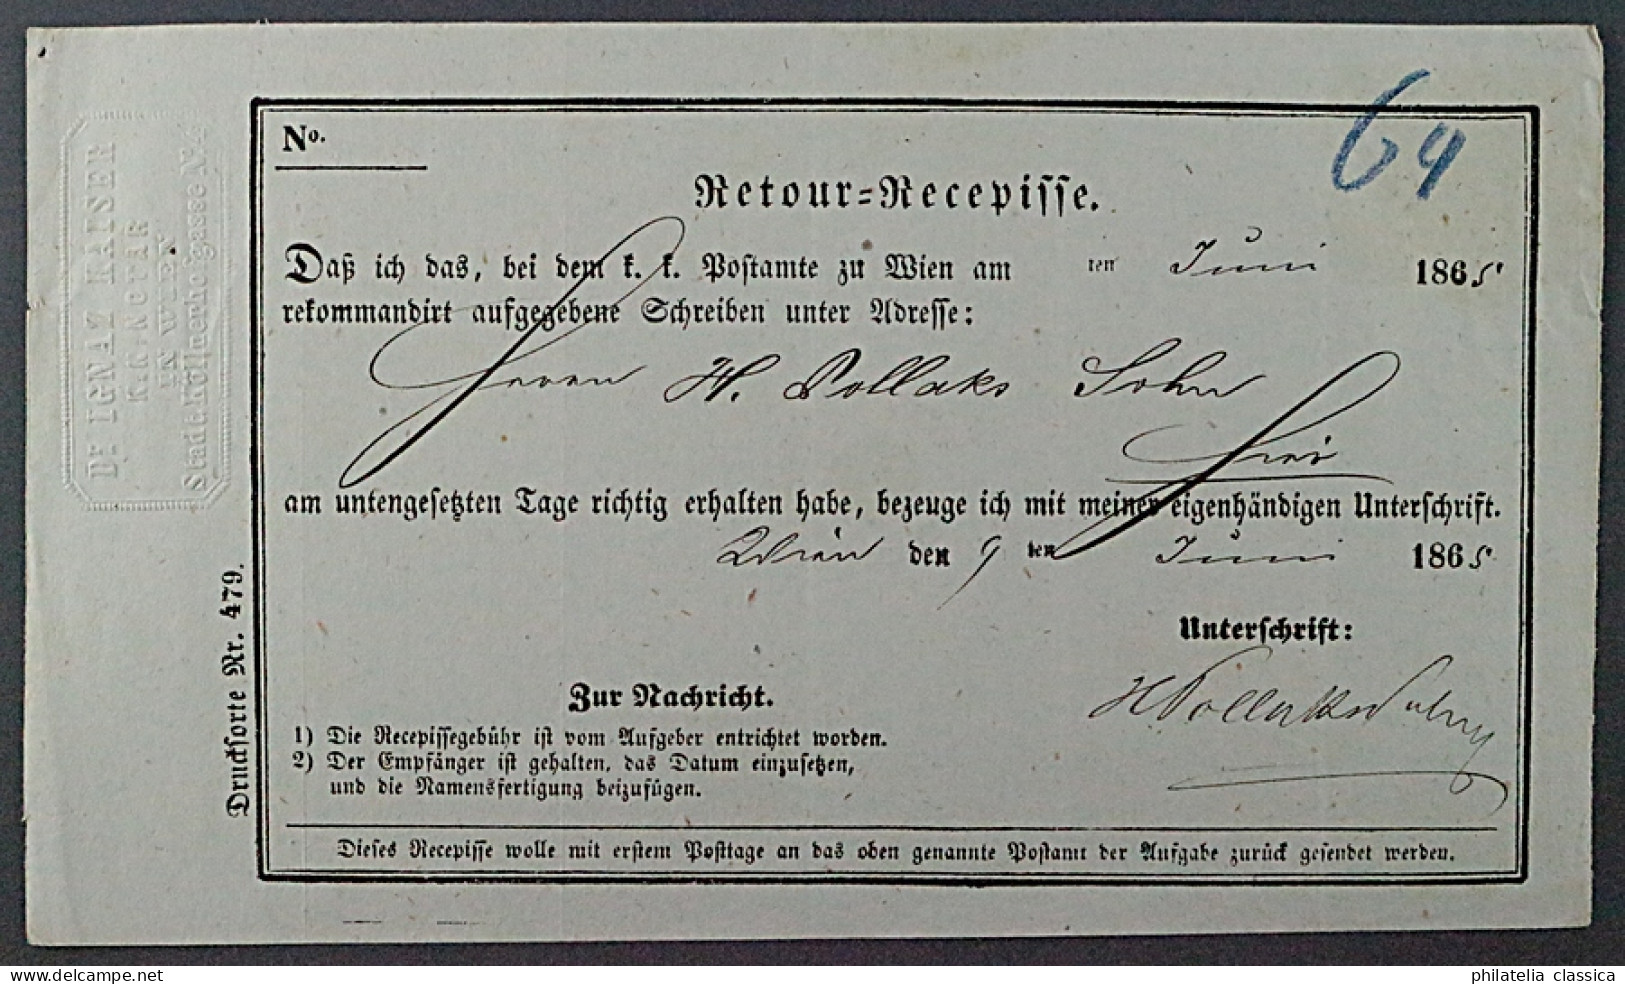 Österreich  32, RETOURRECEPISSE Mit 5 Kr. Idealer Roter Stempel, KW 250,- € ++ - Covers & Documents